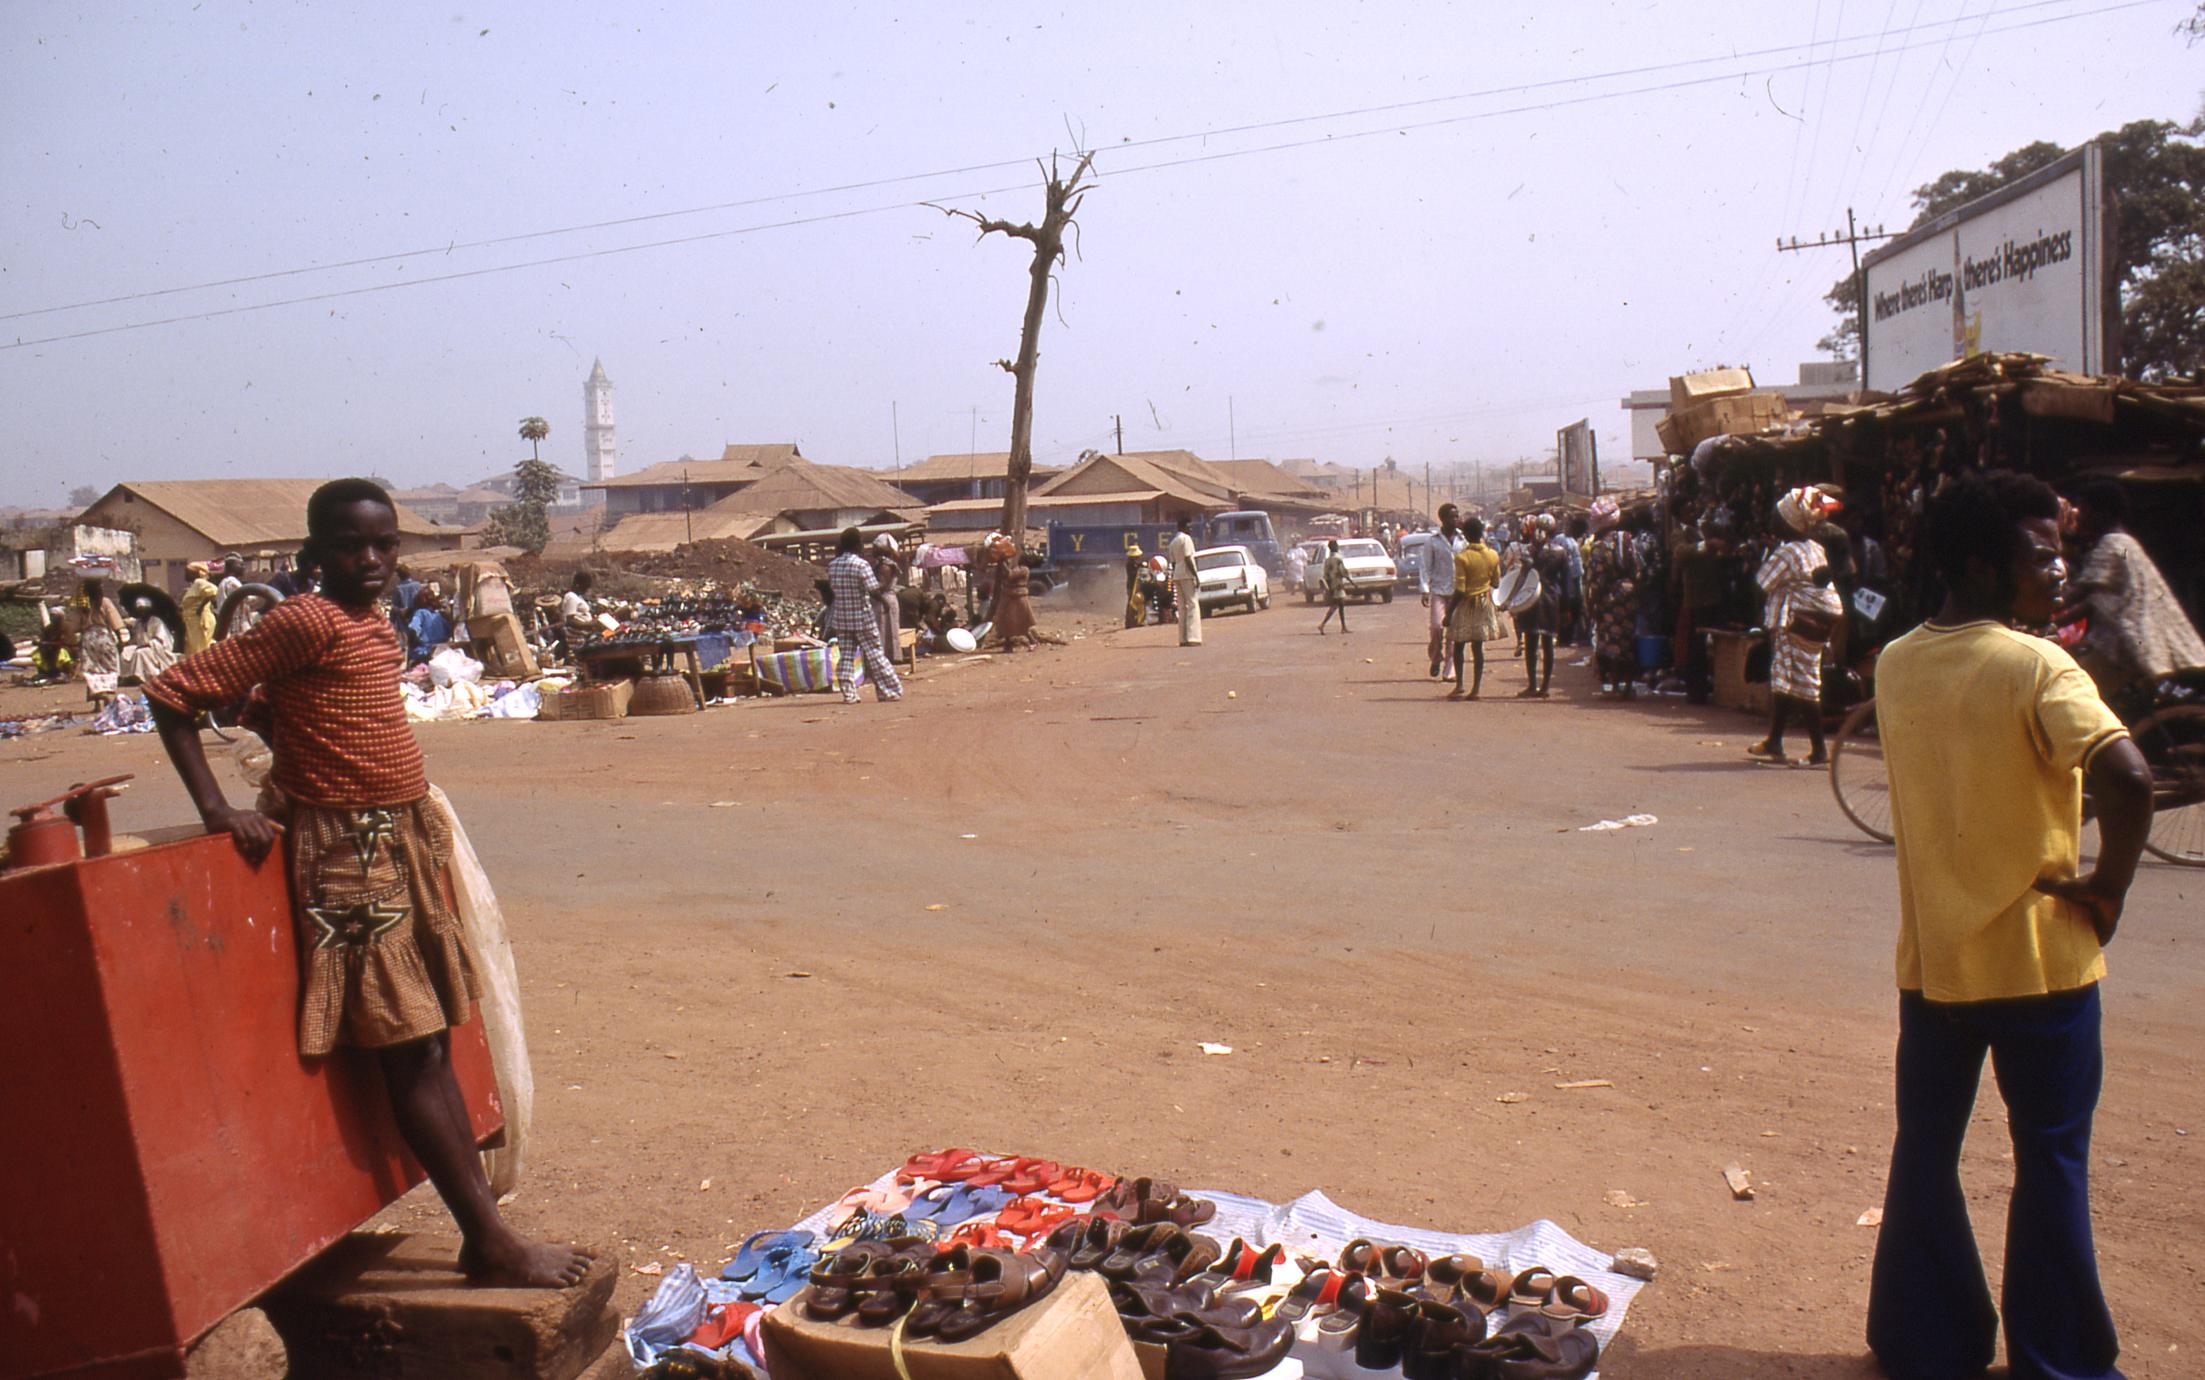 Shops of the Ilesa market